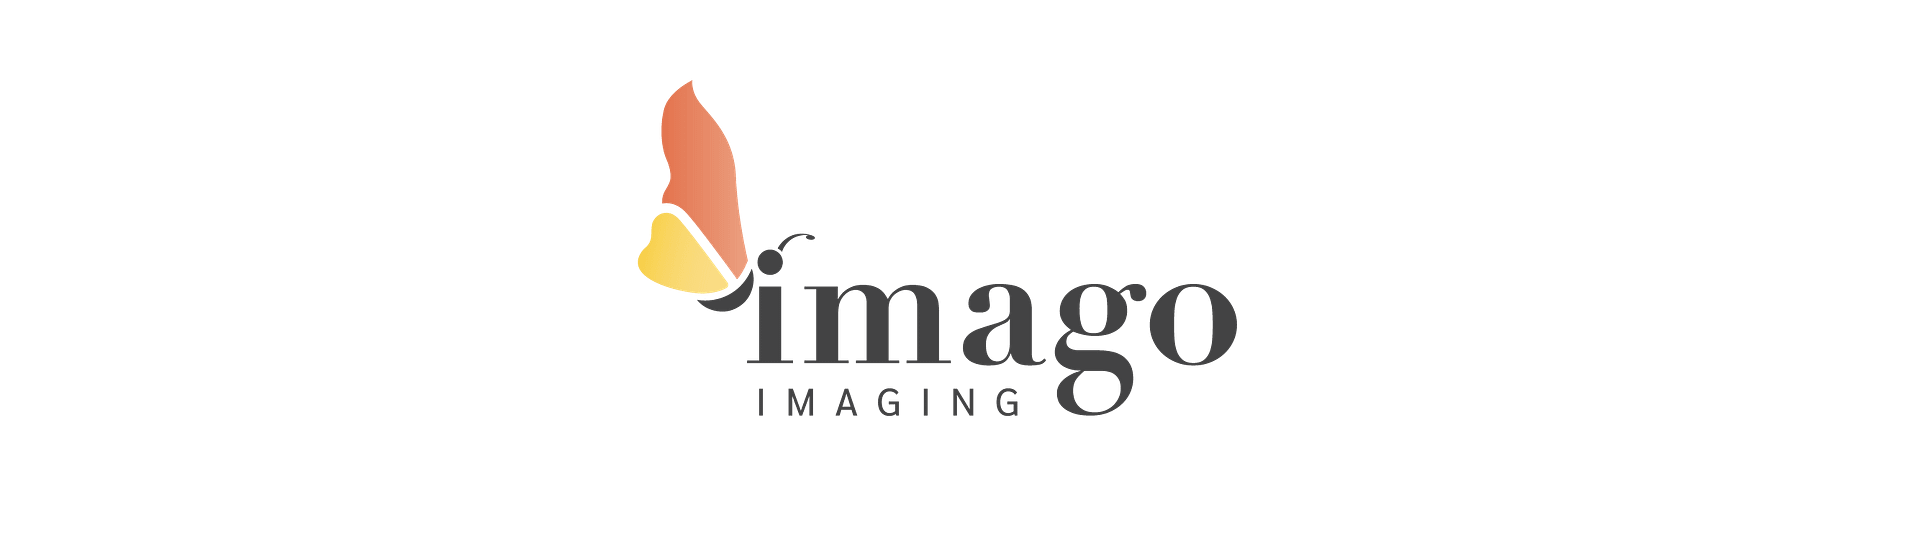 Imago Imaging logo